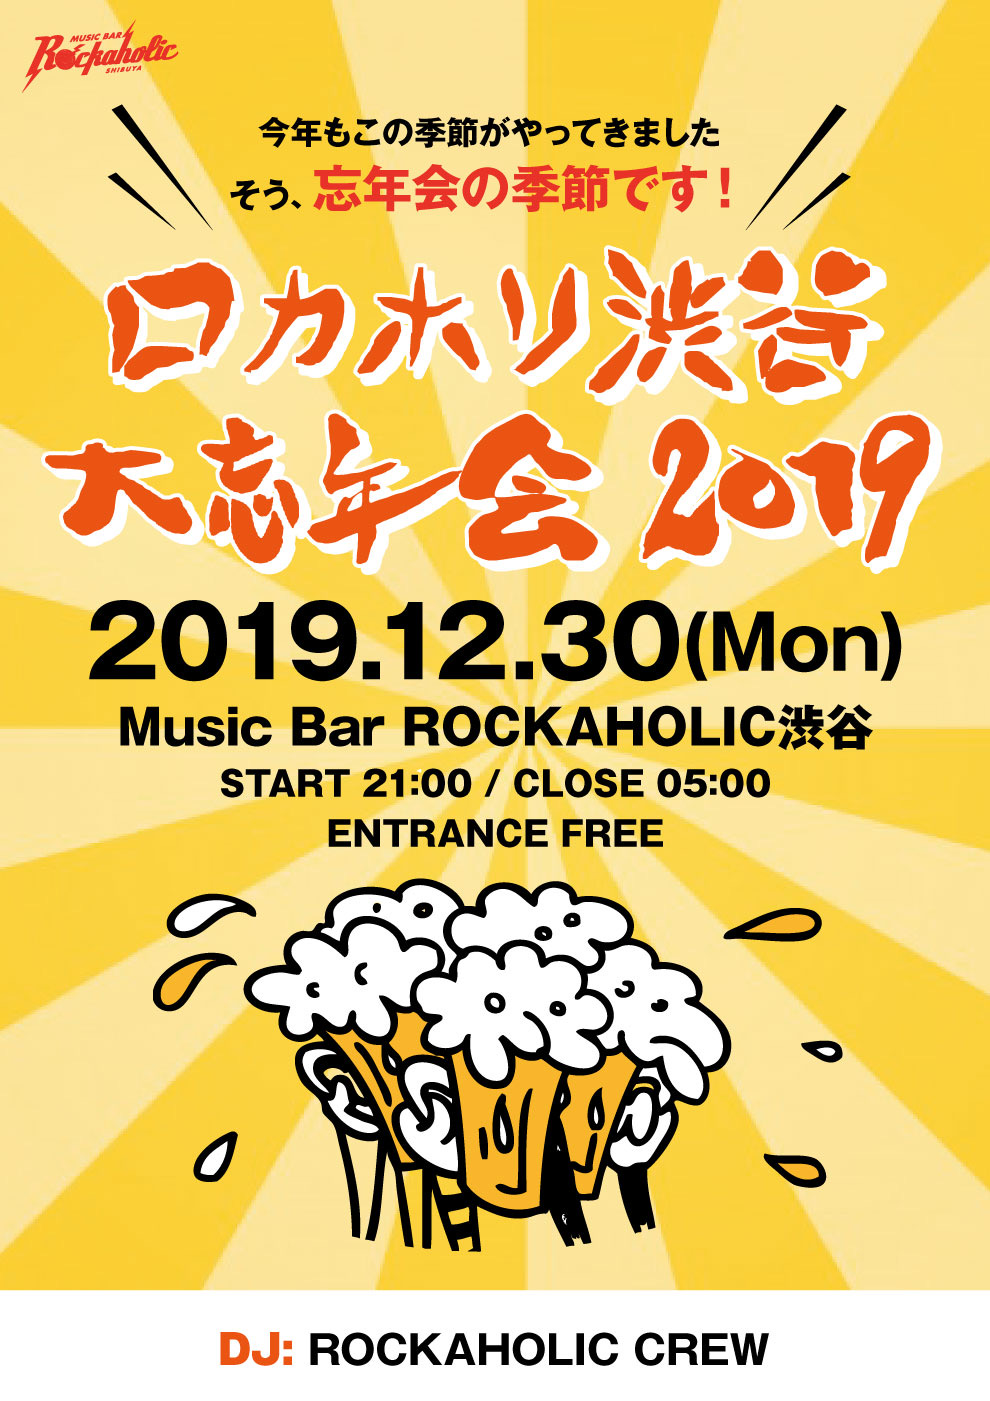 https://bar-rockaholic.jp/shibuya/blog/126DAFA0-BDF6-4819-935B-778BCEB03532.jpeg